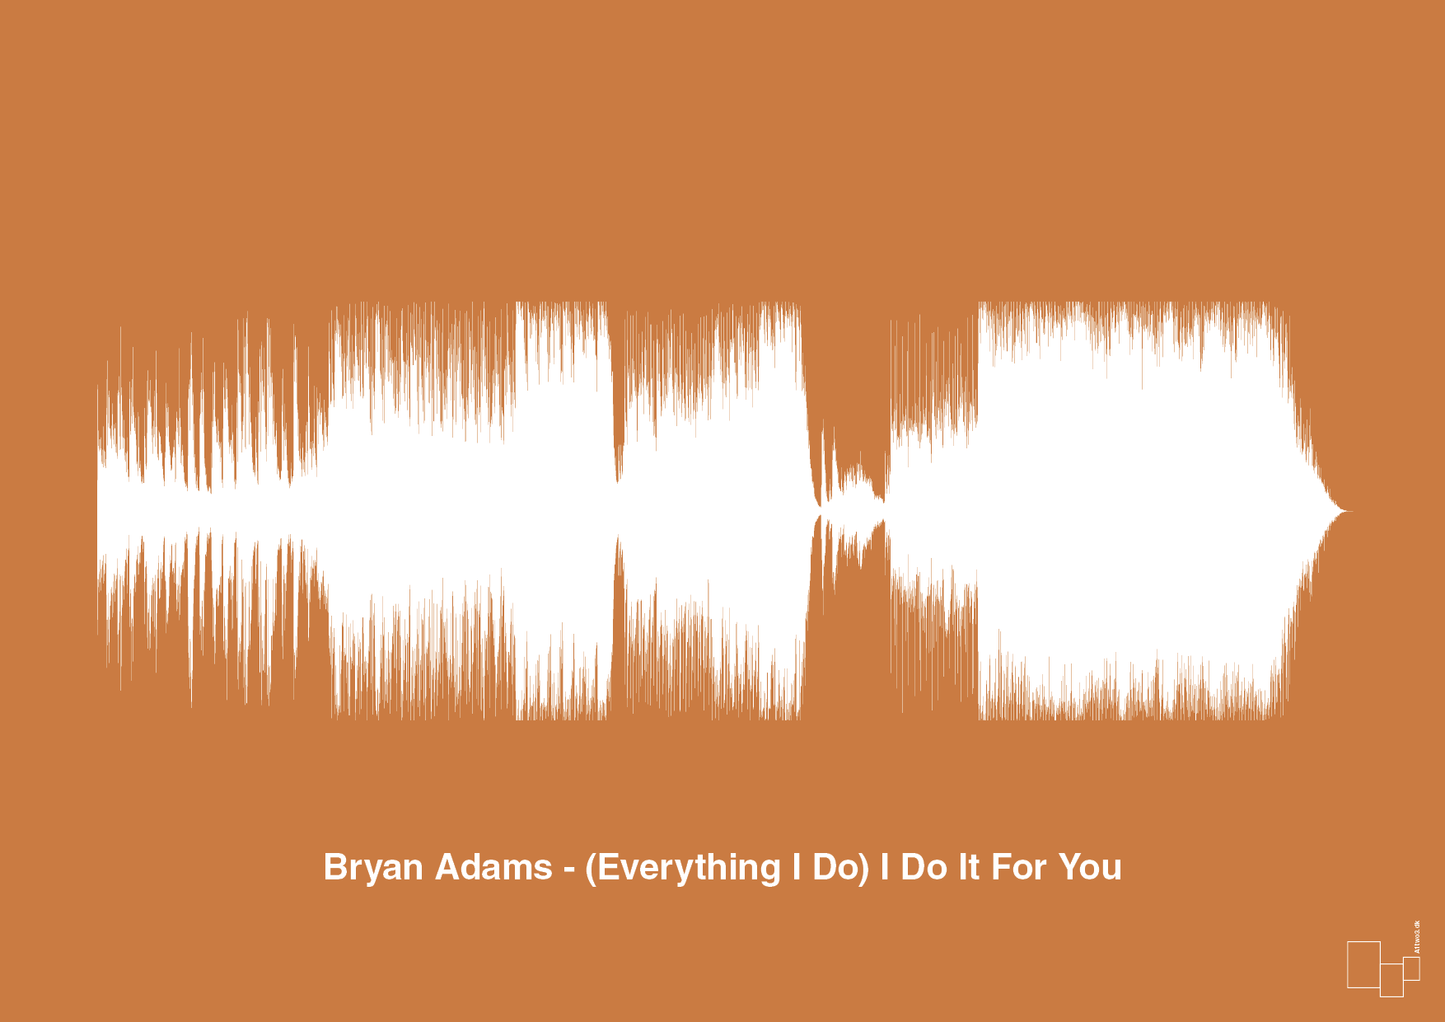 bryan adams - (everything i do) i do it for you - Plakat med Musik i Rumba Orange